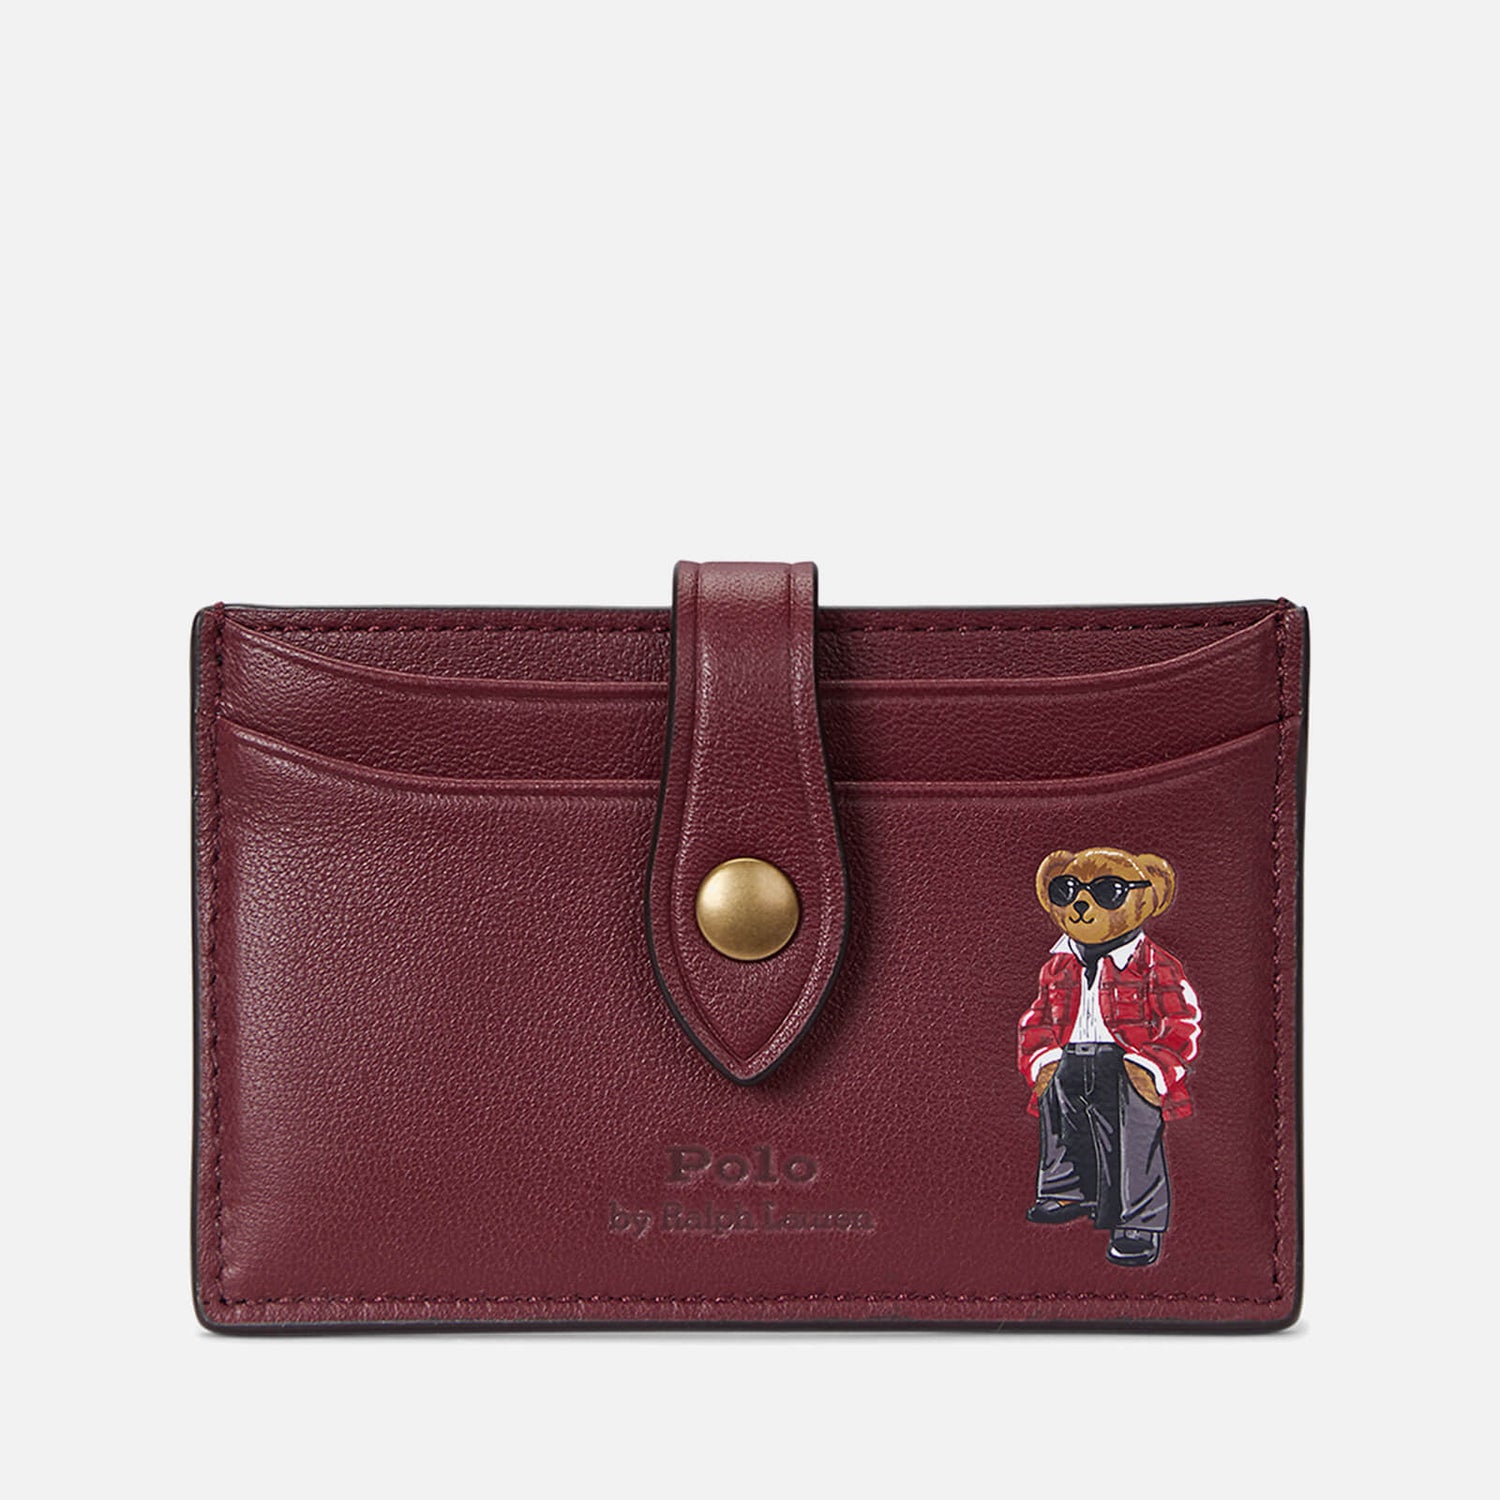 Polo Ralph Lauren Small Wallet - Bordeaux